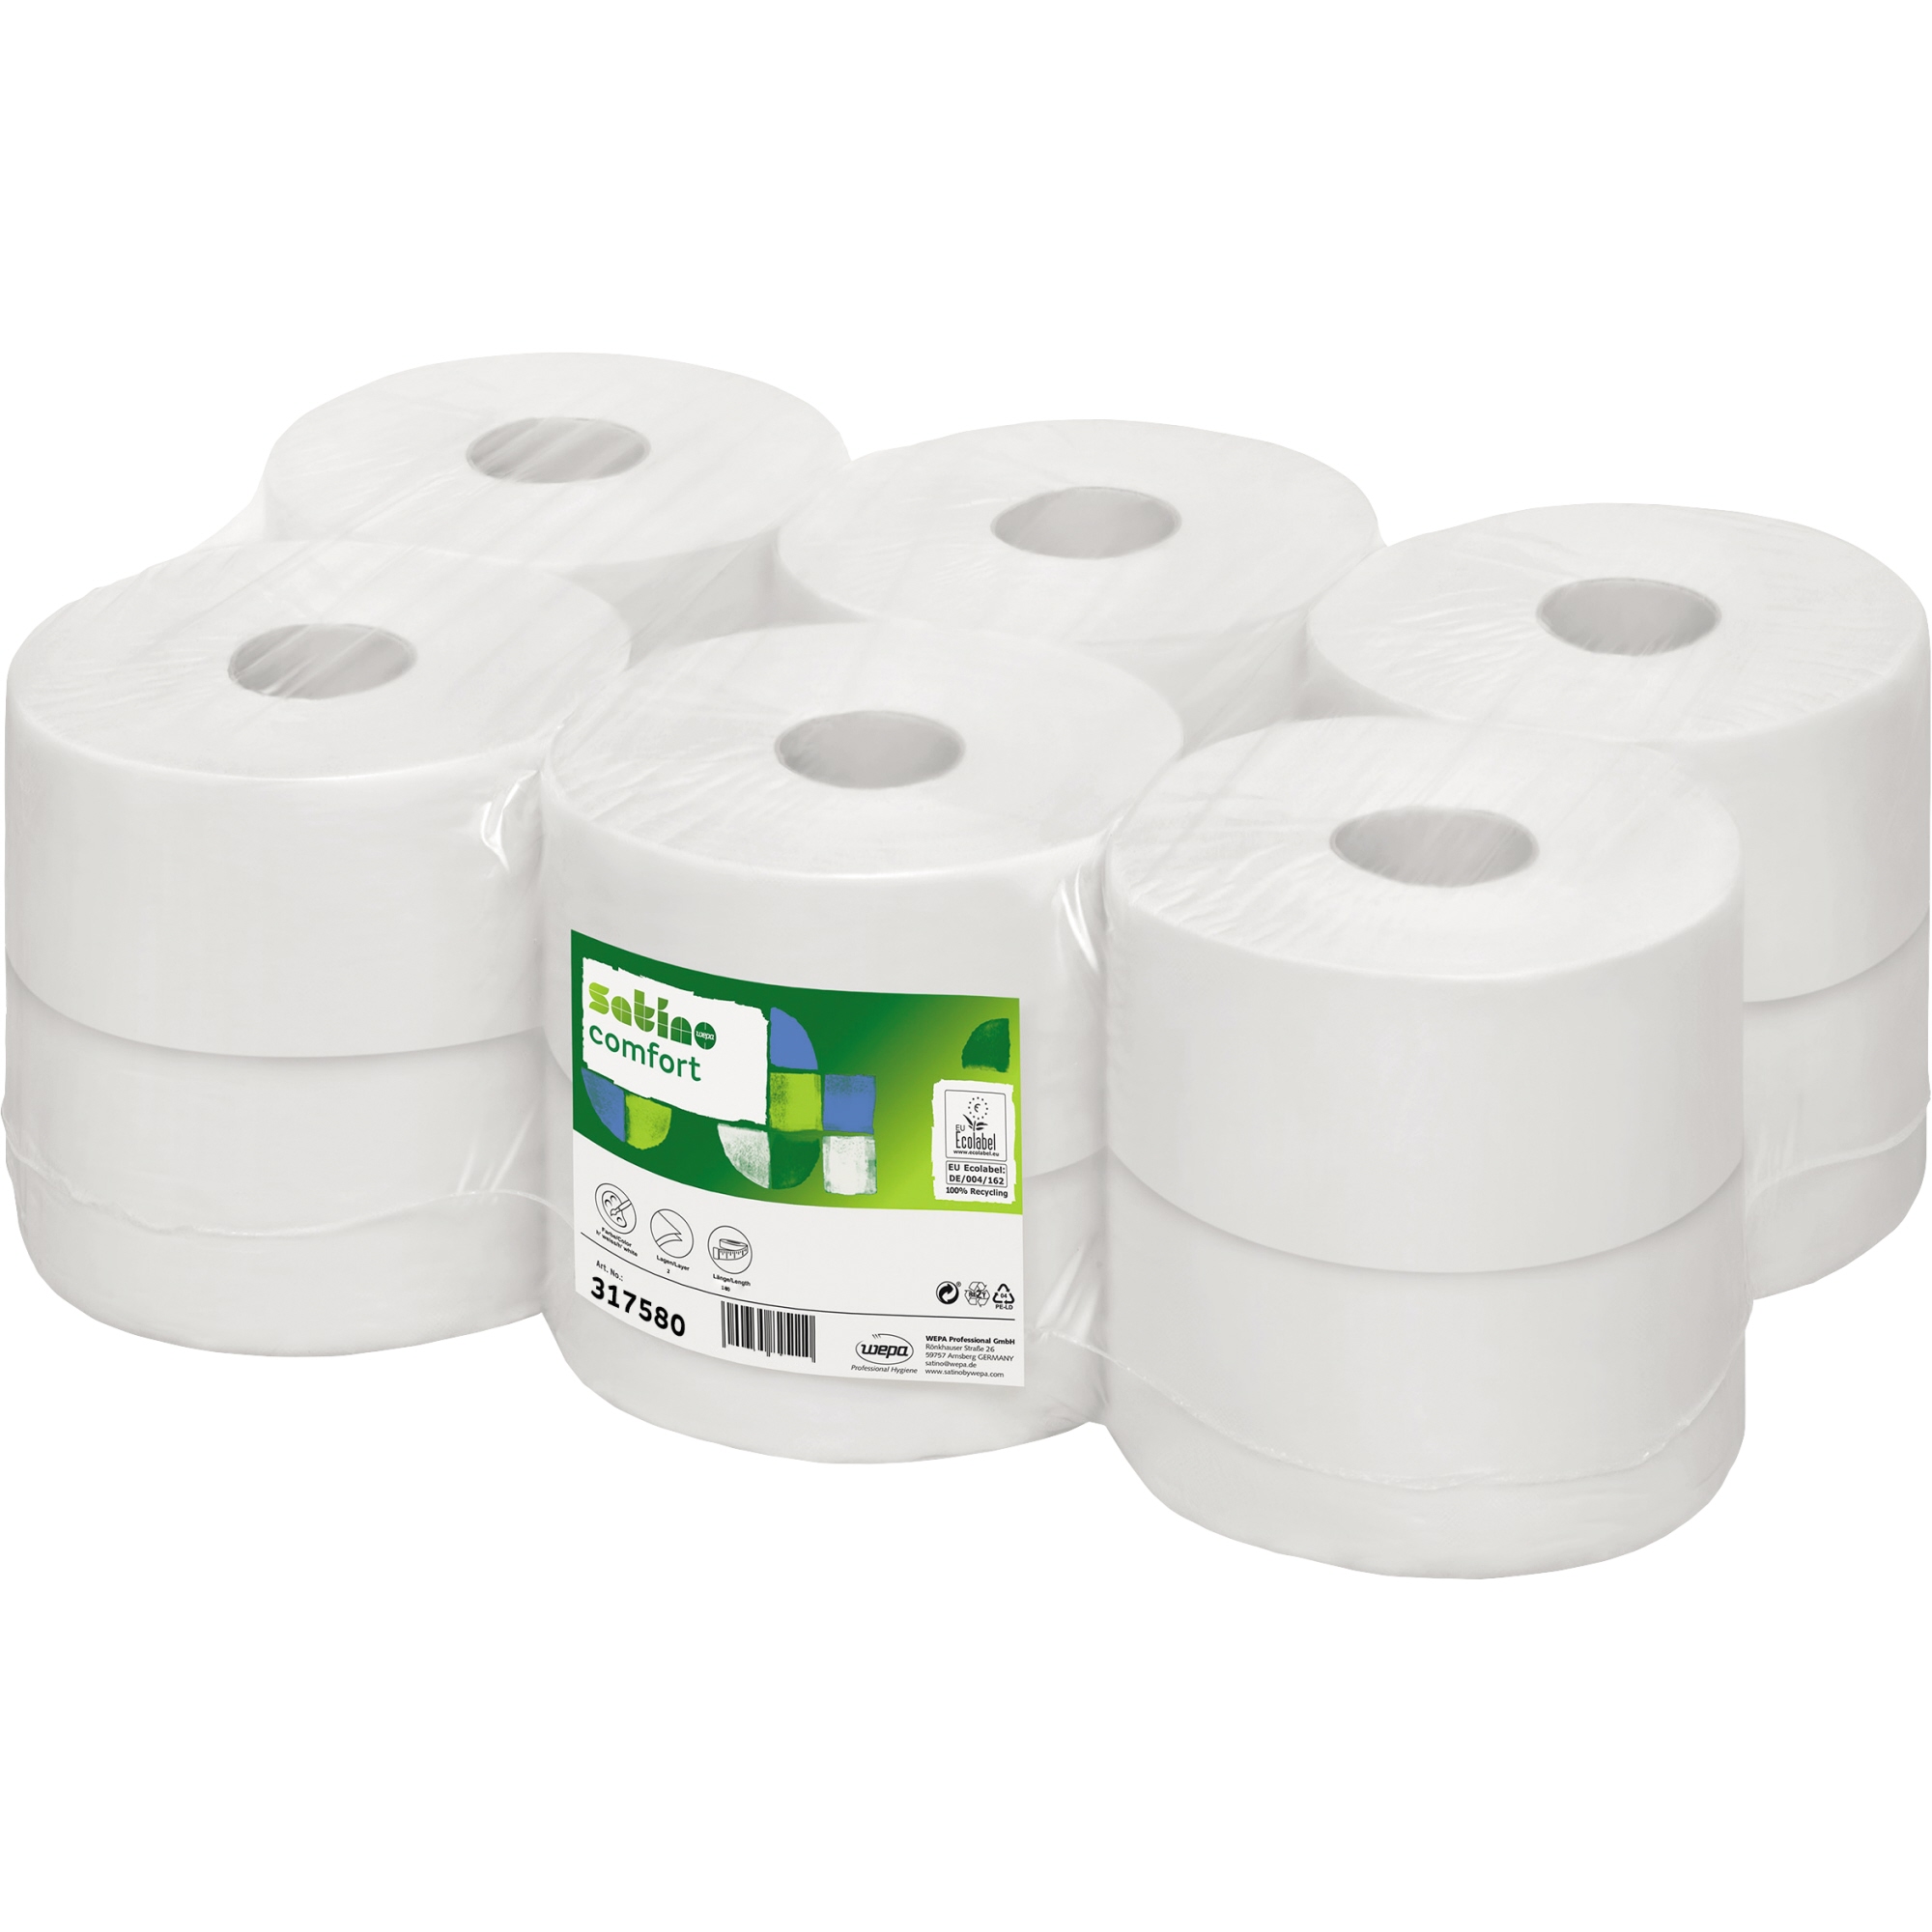 Sationo Toilettenpapier Comfort Recycling 2-lagig 12er Pack